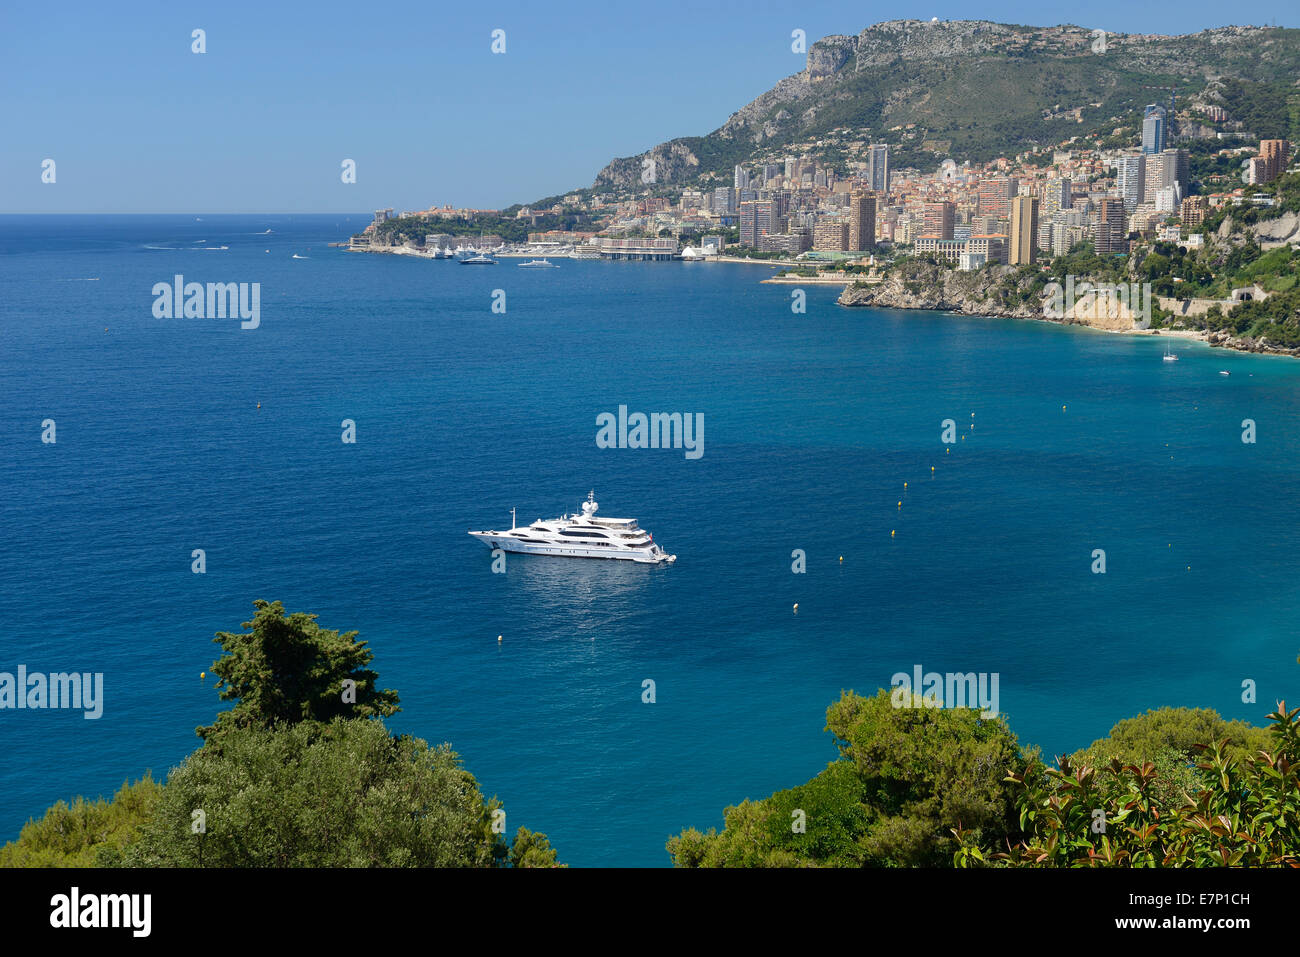 Europe, France, Monaco, Monte Carlo, French, Riviera, Mediterranean, coast, city, boat, Stock Photo